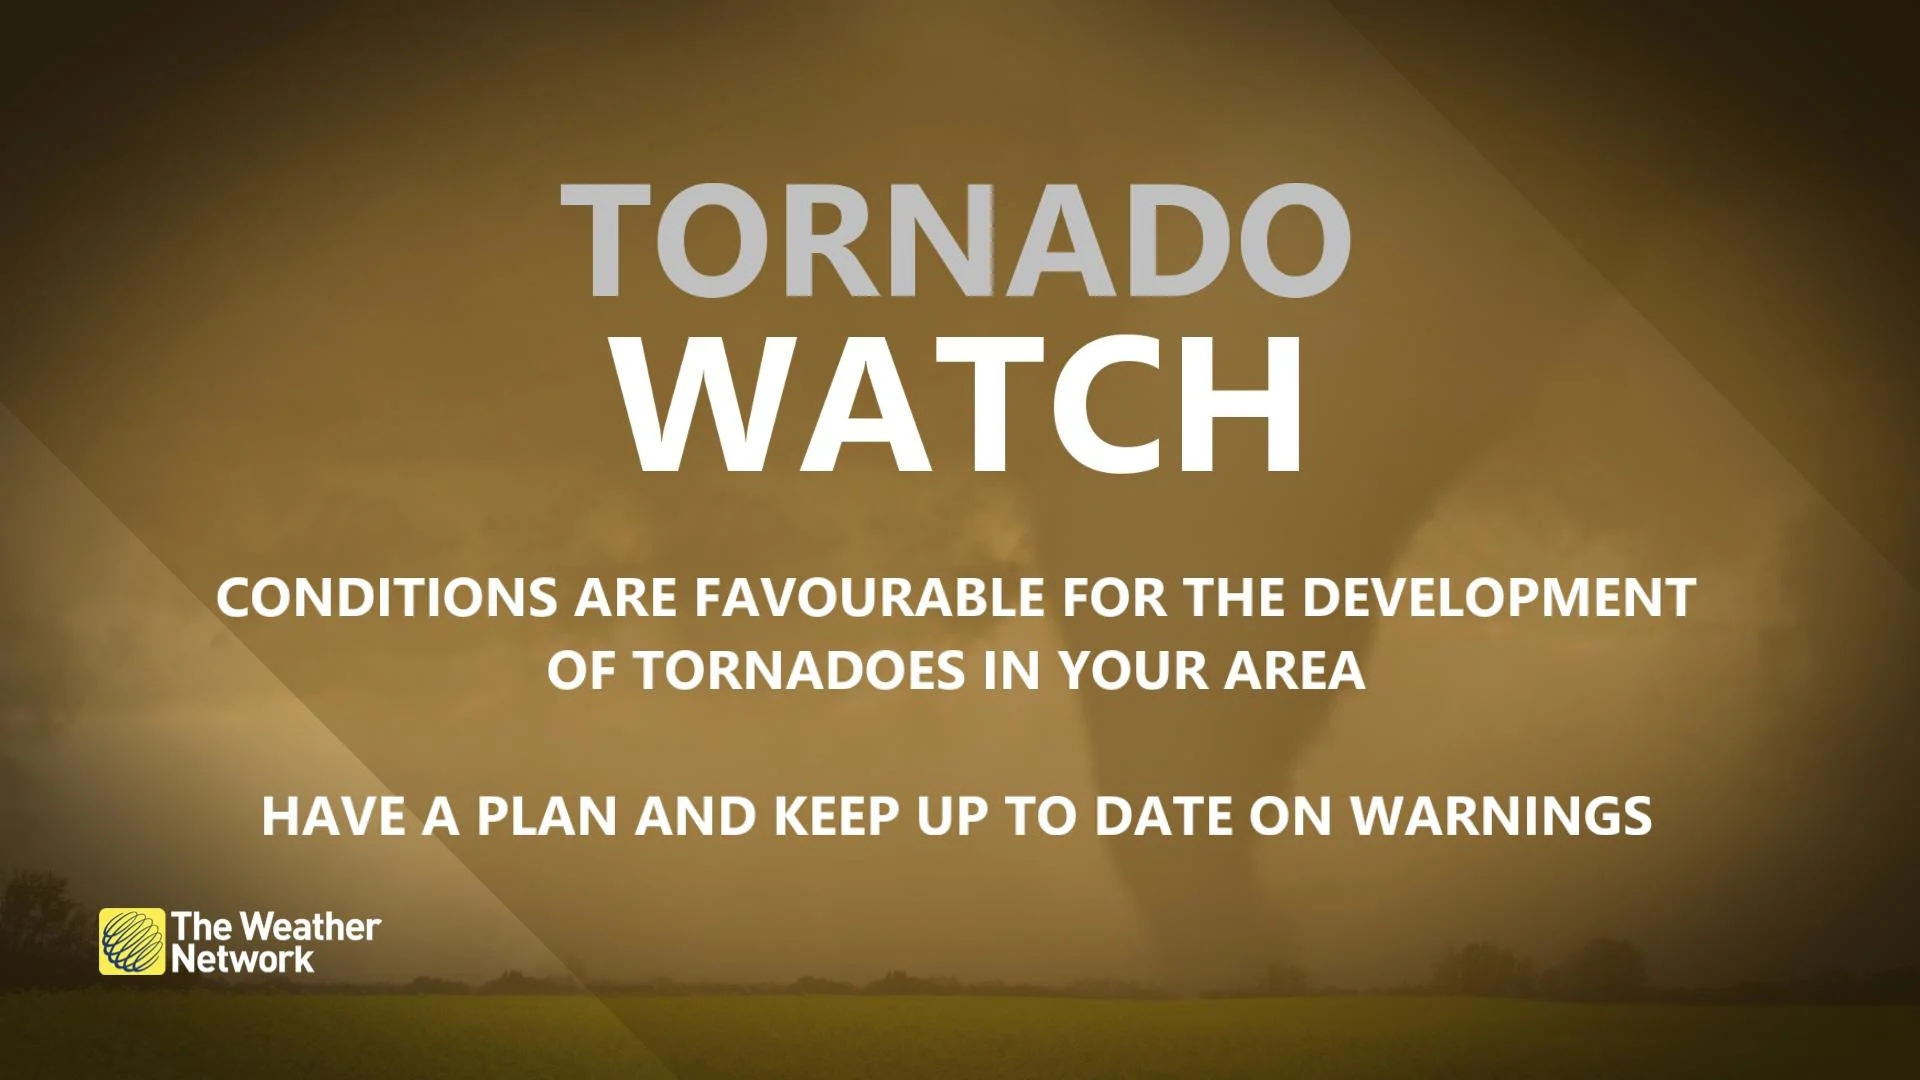 Tornado Watch - What to do